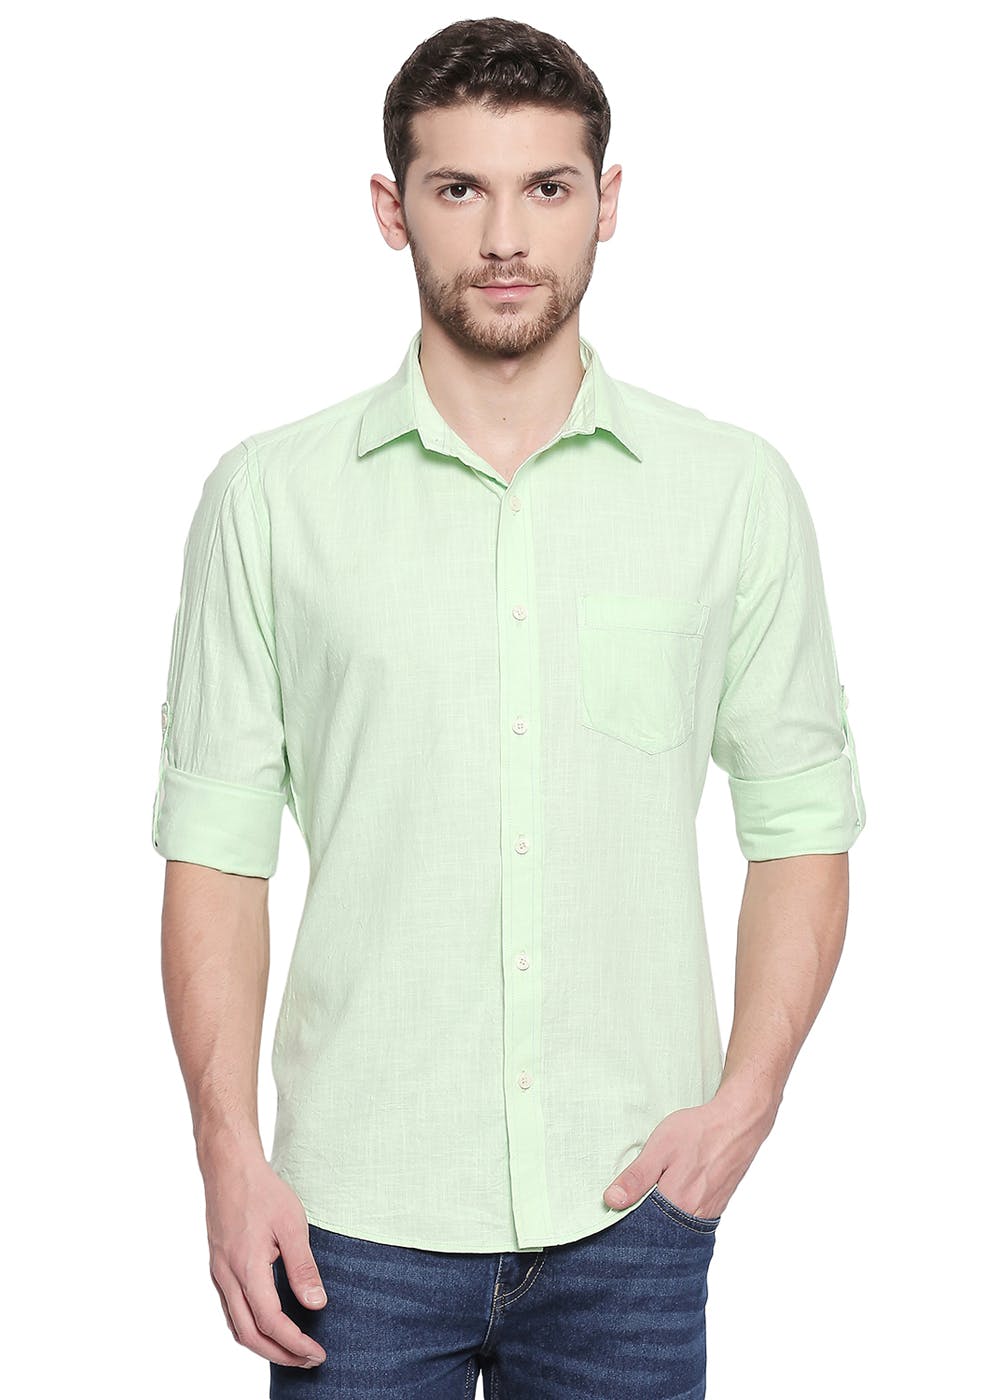 Get Solid Mint Green Cotton-Linen Casual Shirt at ₹ 799 | LBB Shop